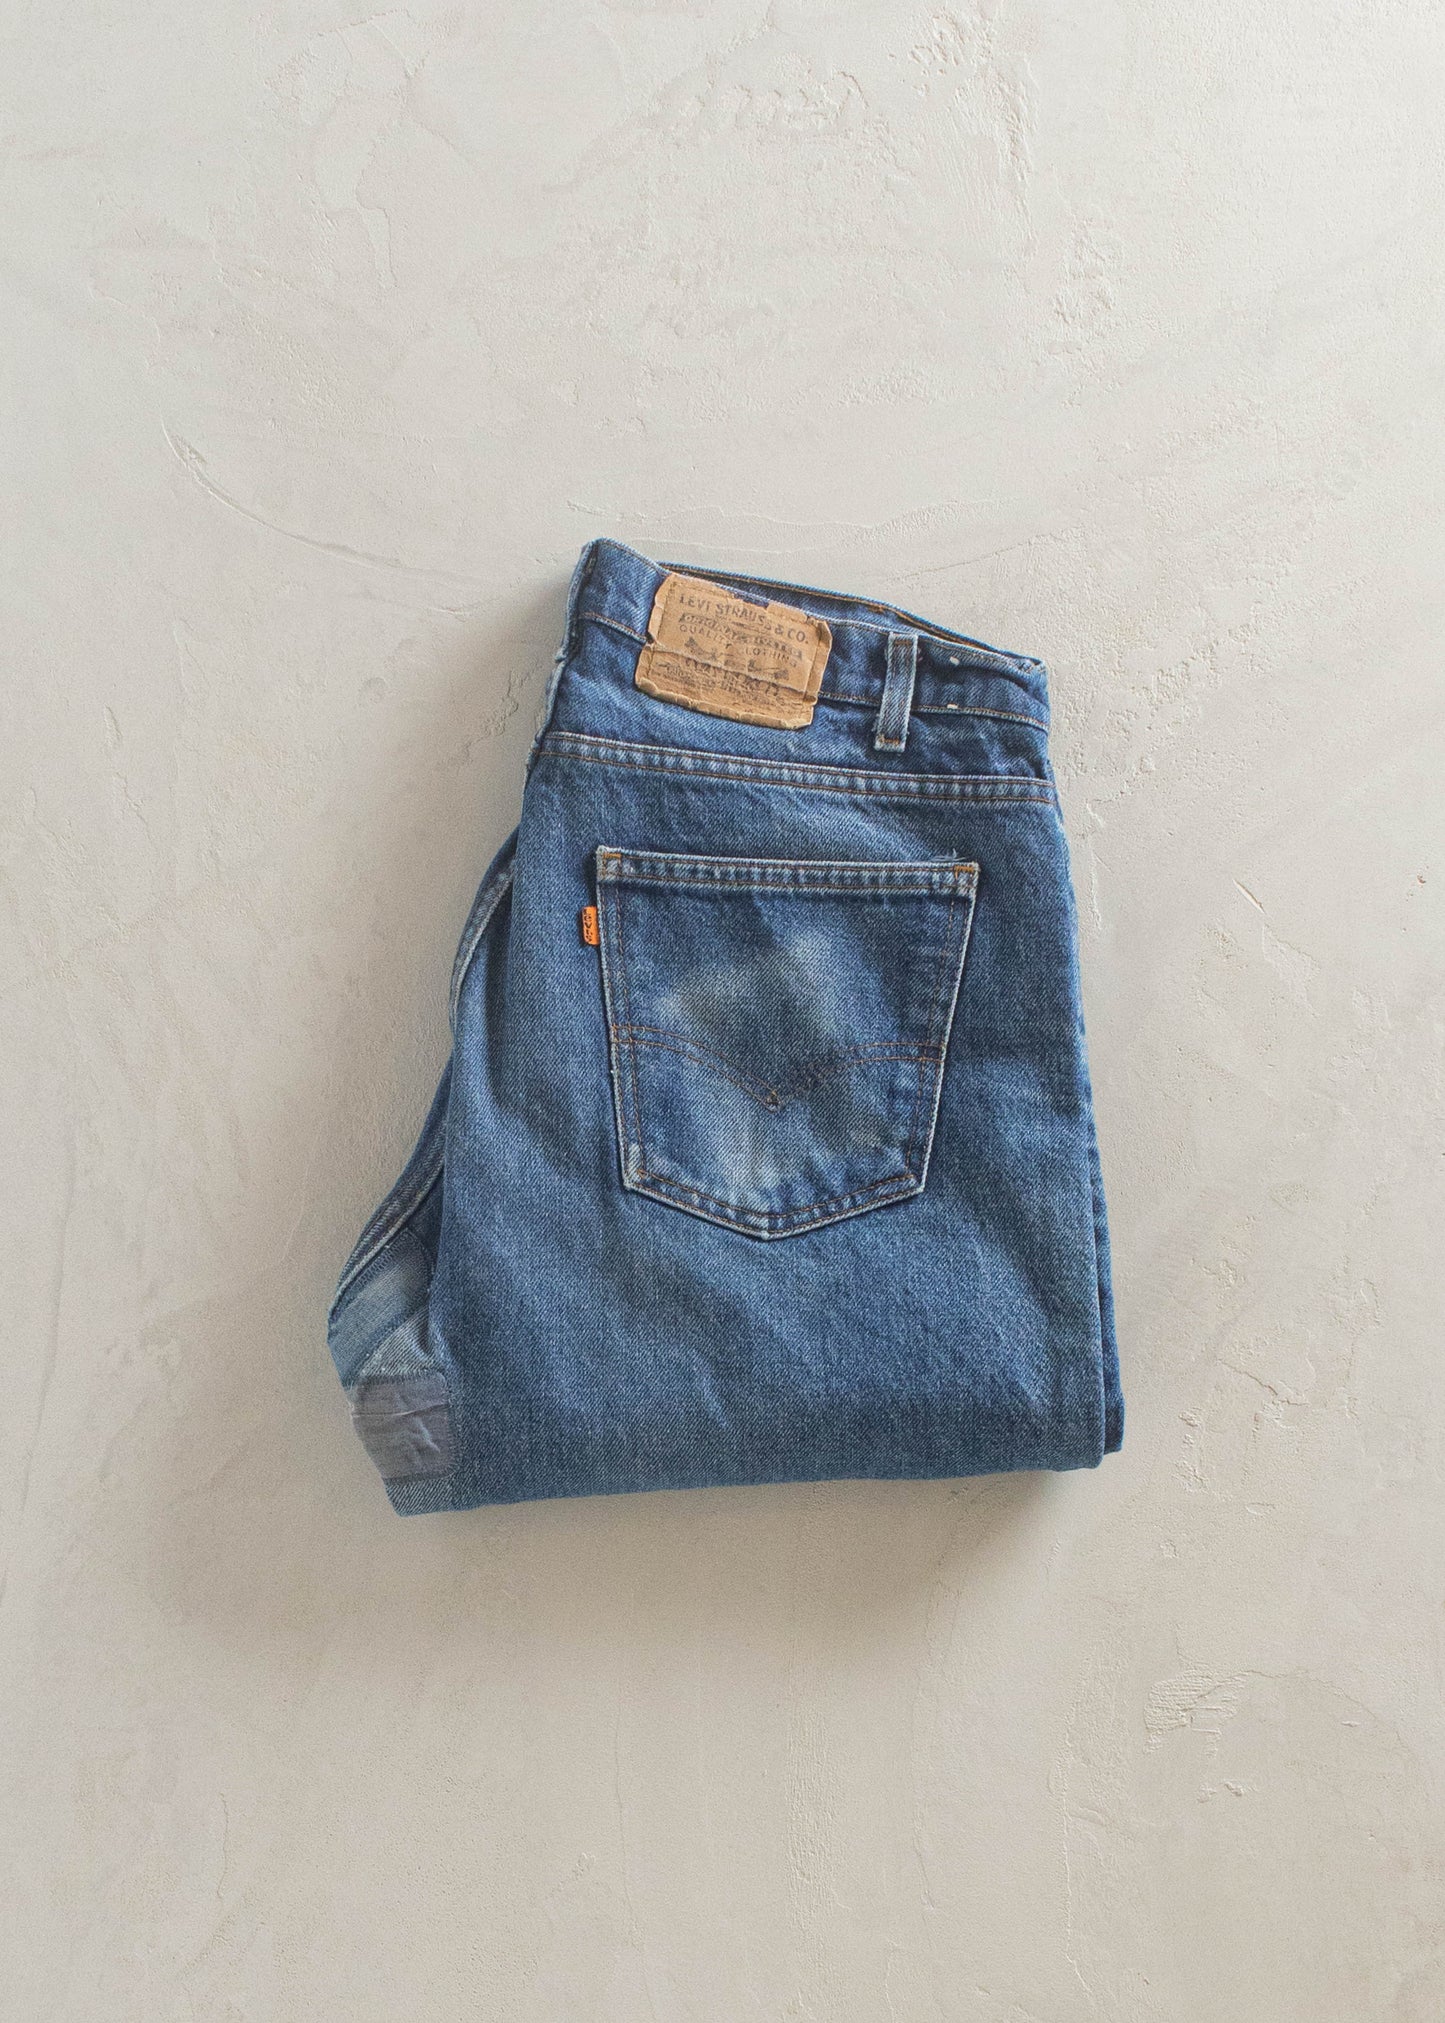 1980s Levi's 505 Orange Tab Darkwash Jeans Size Women's 32 Men's 34